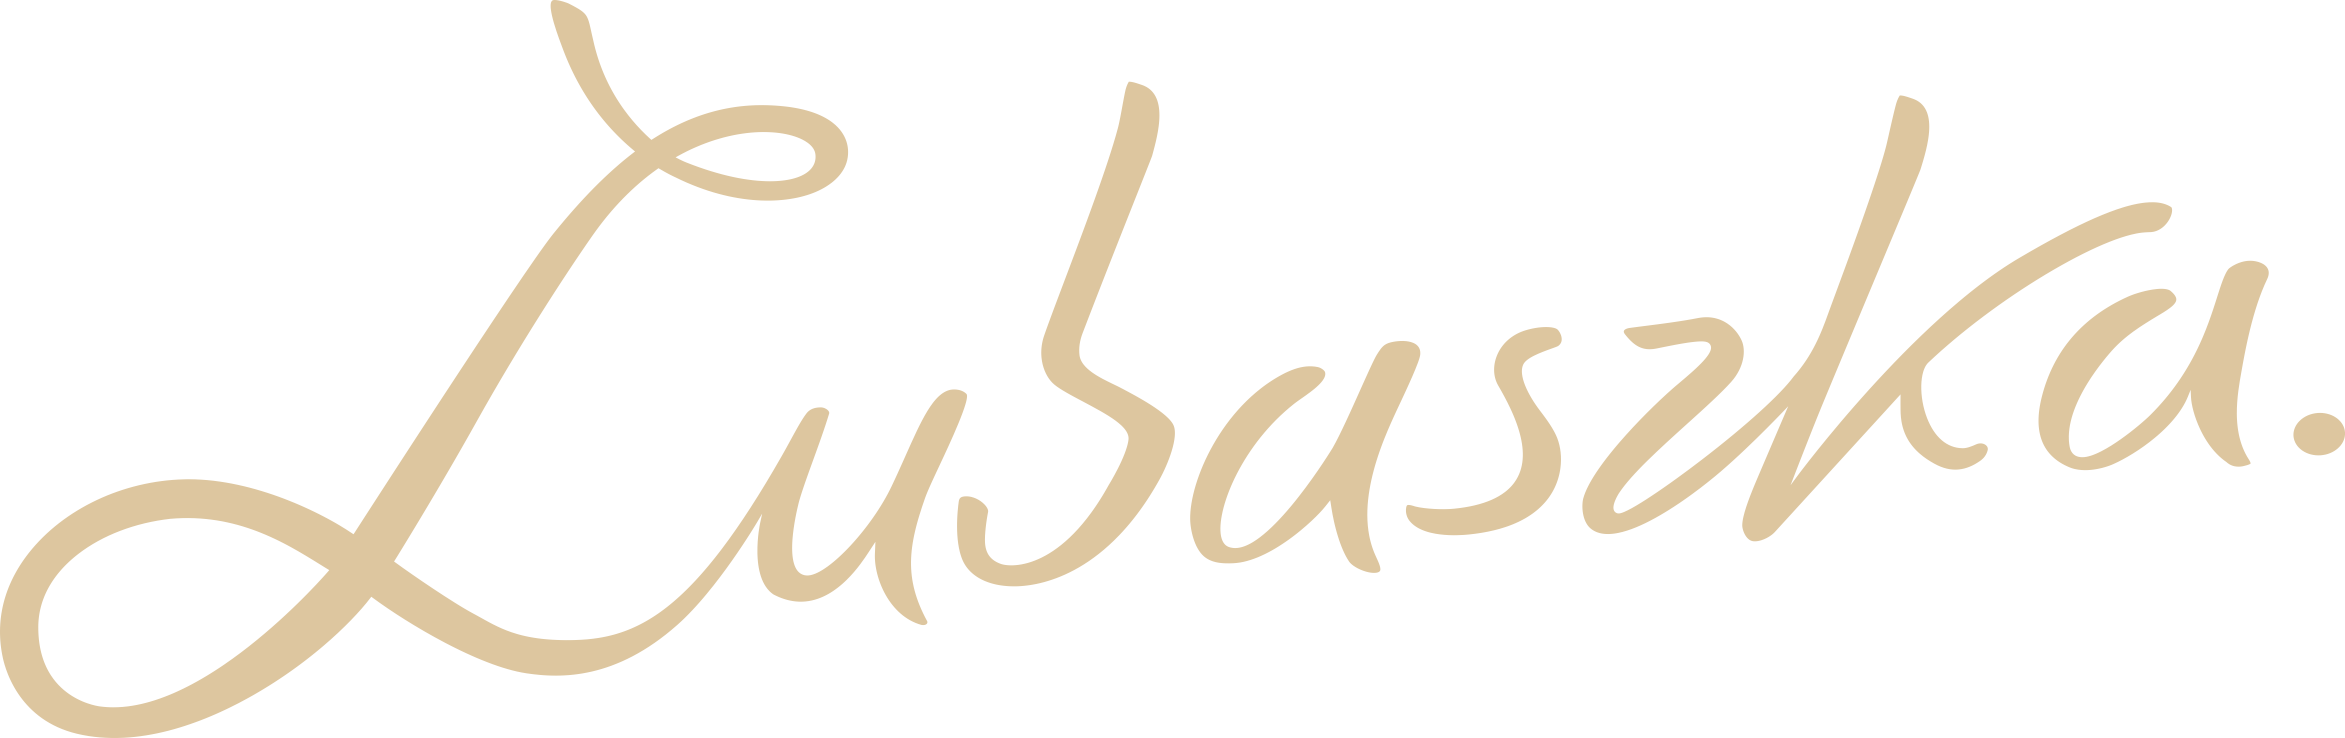 lubaszka logo